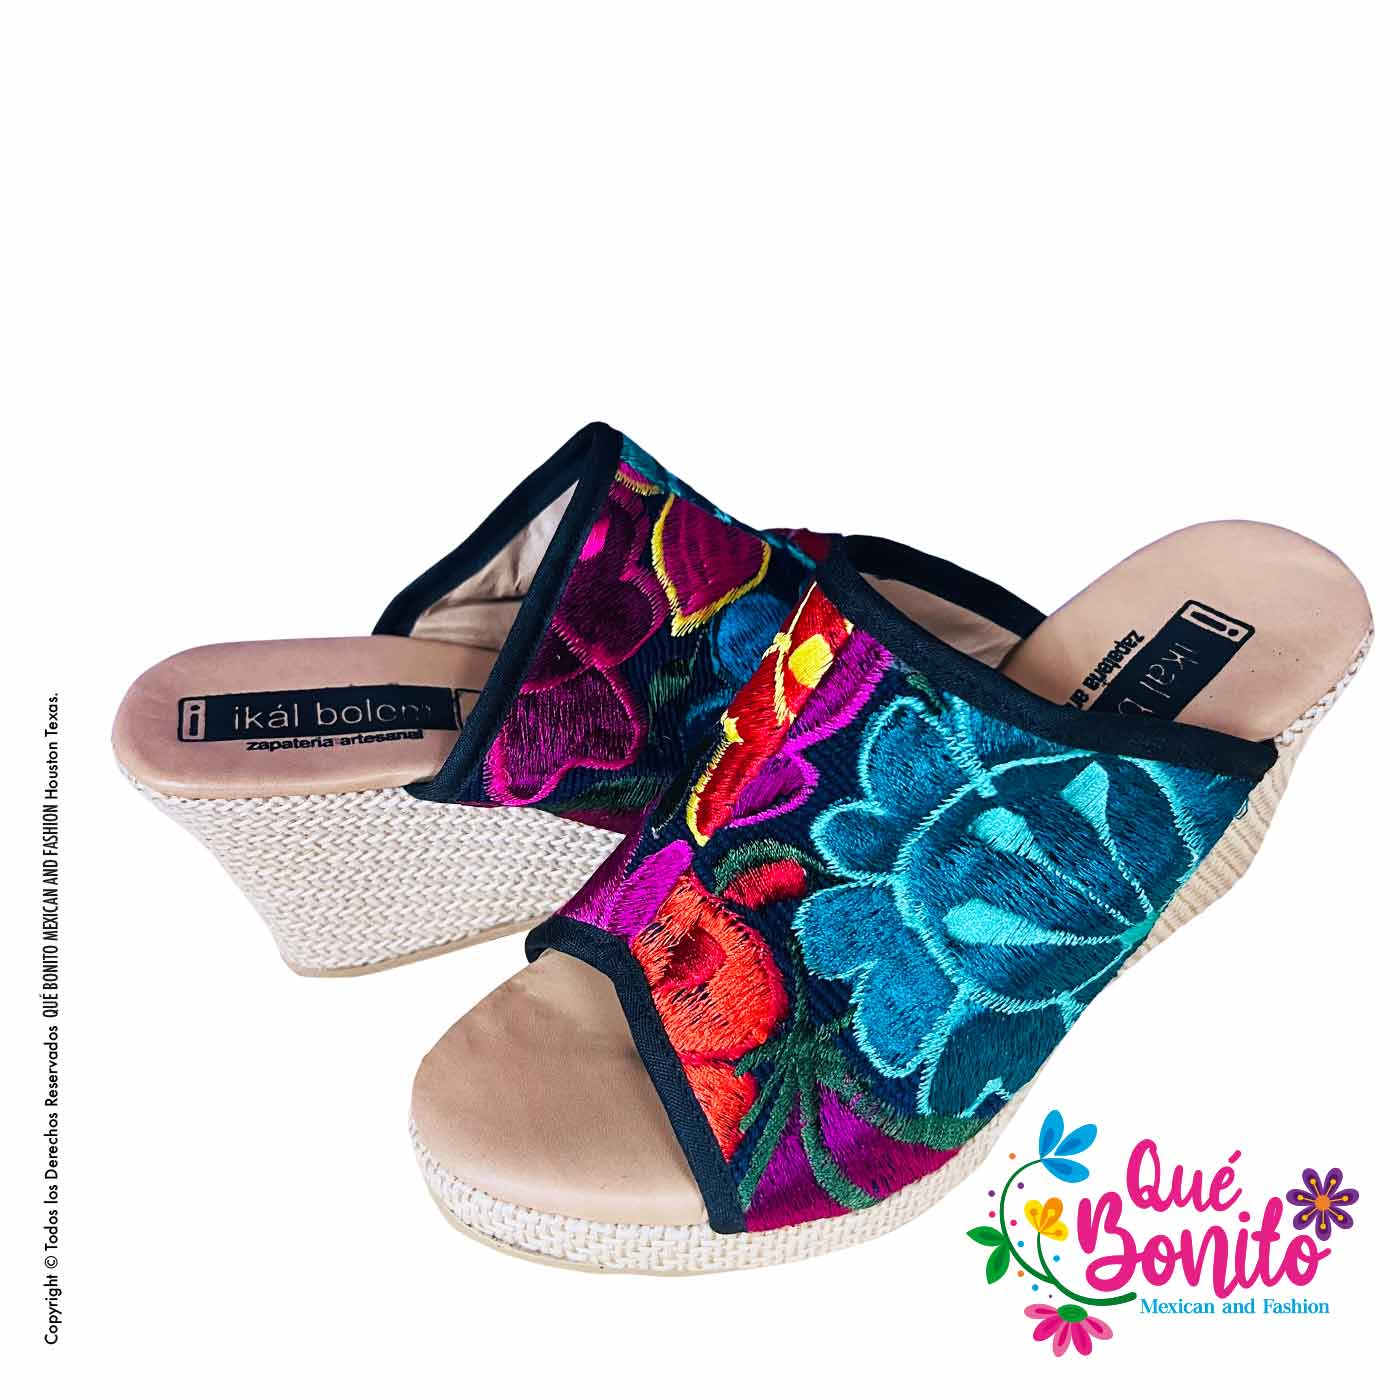 Marina Embroidered Heel  Que Bonito Mexican and Fashion